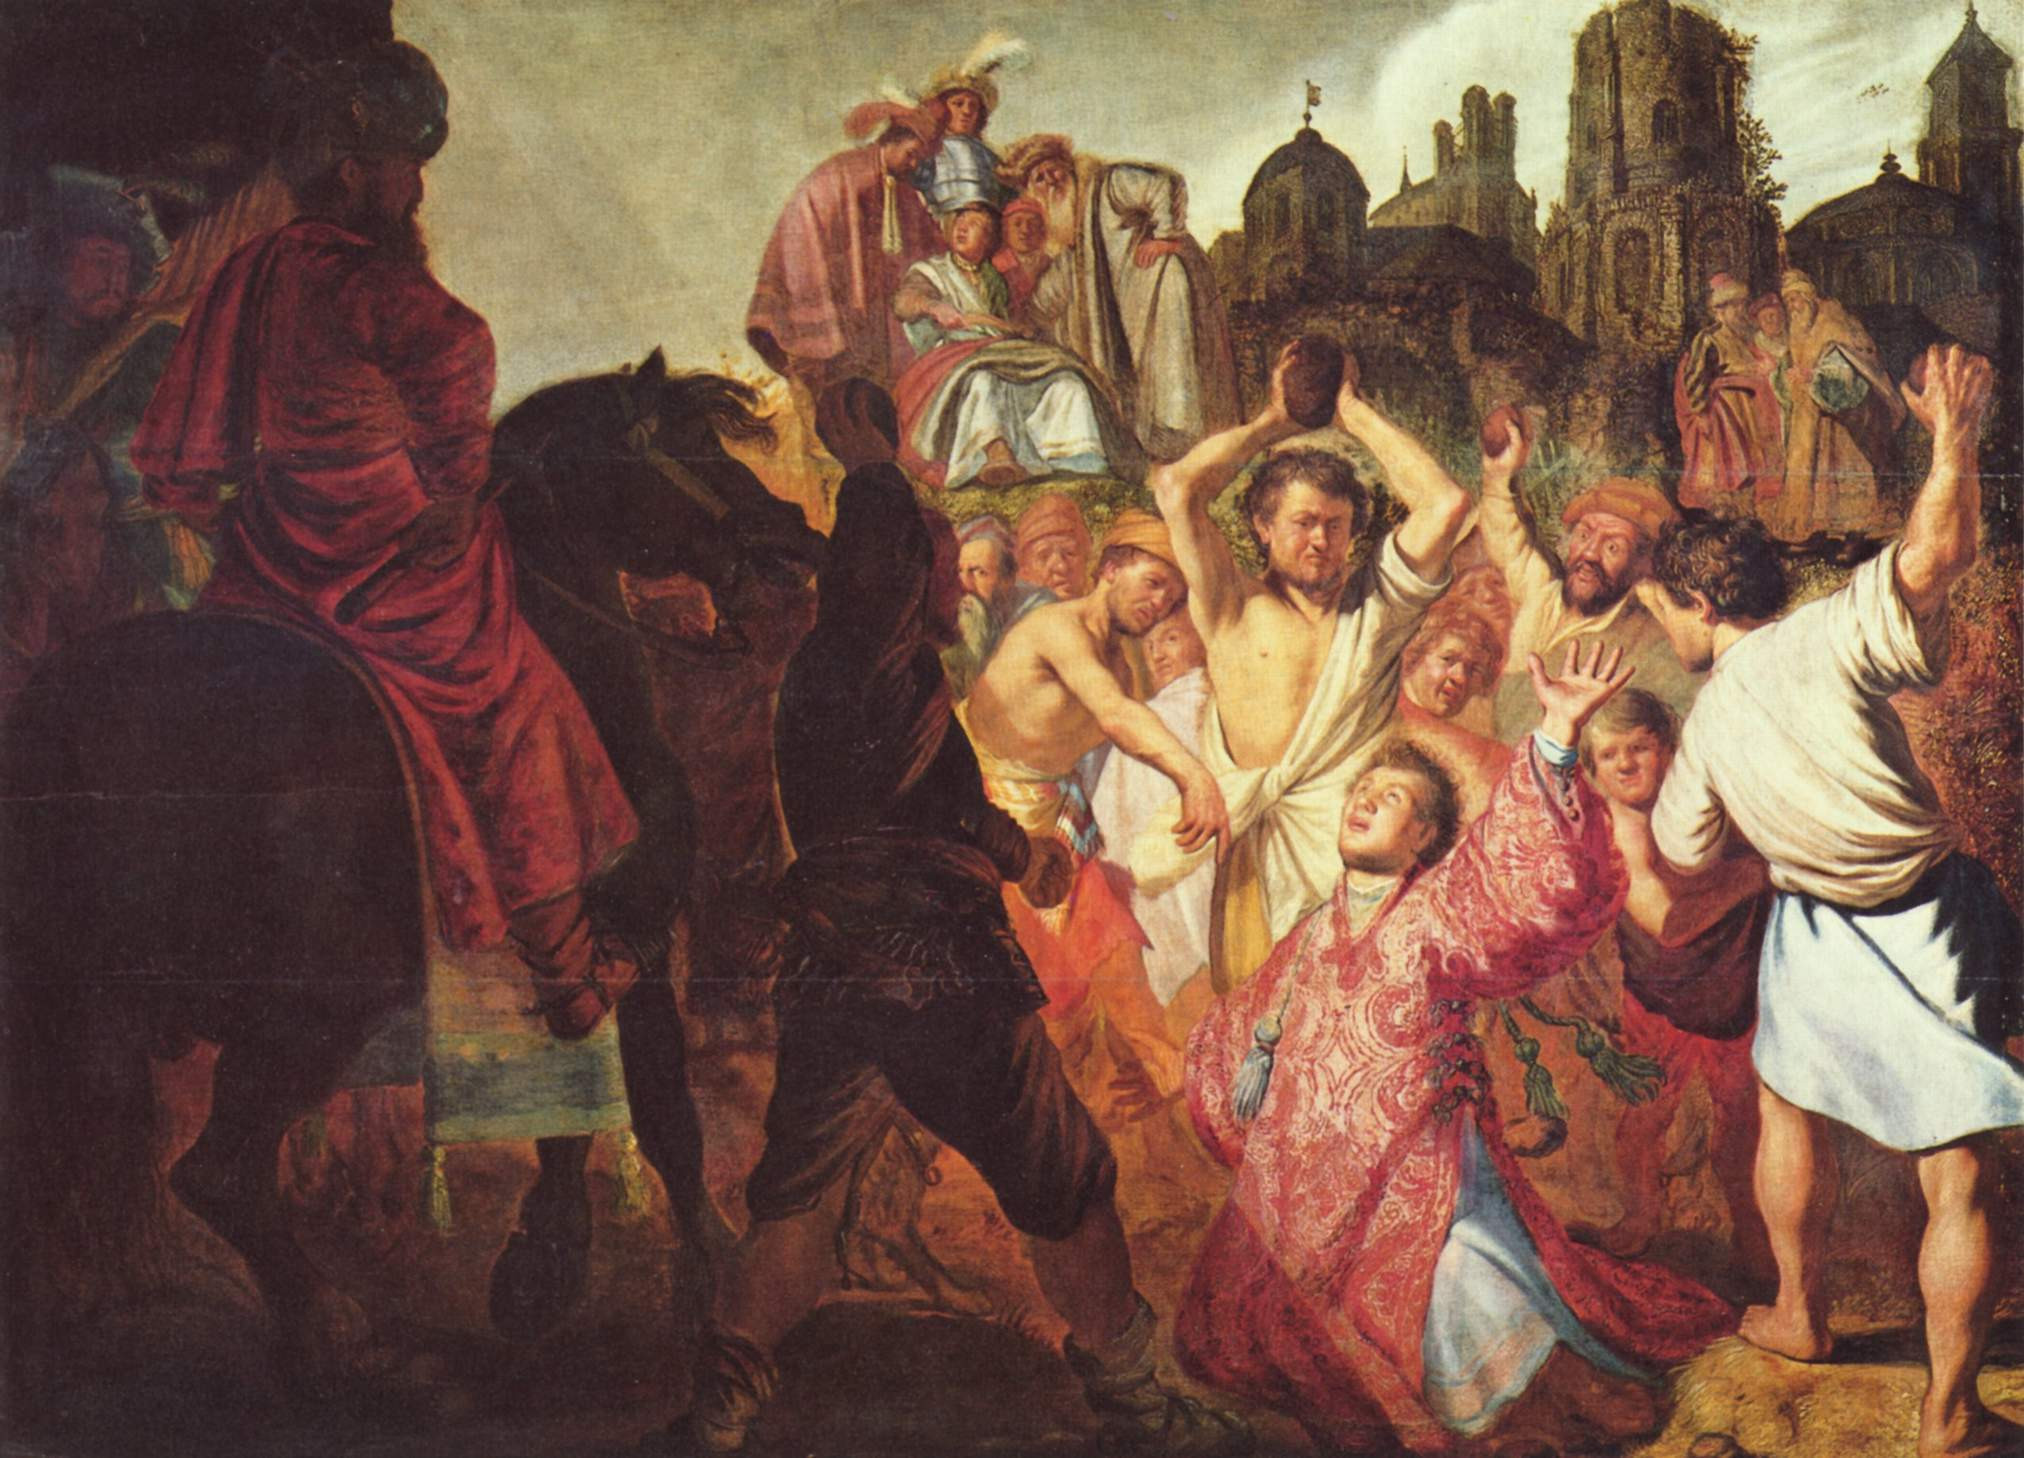 Рембрандт «Избиение святого Стефана» (1625)